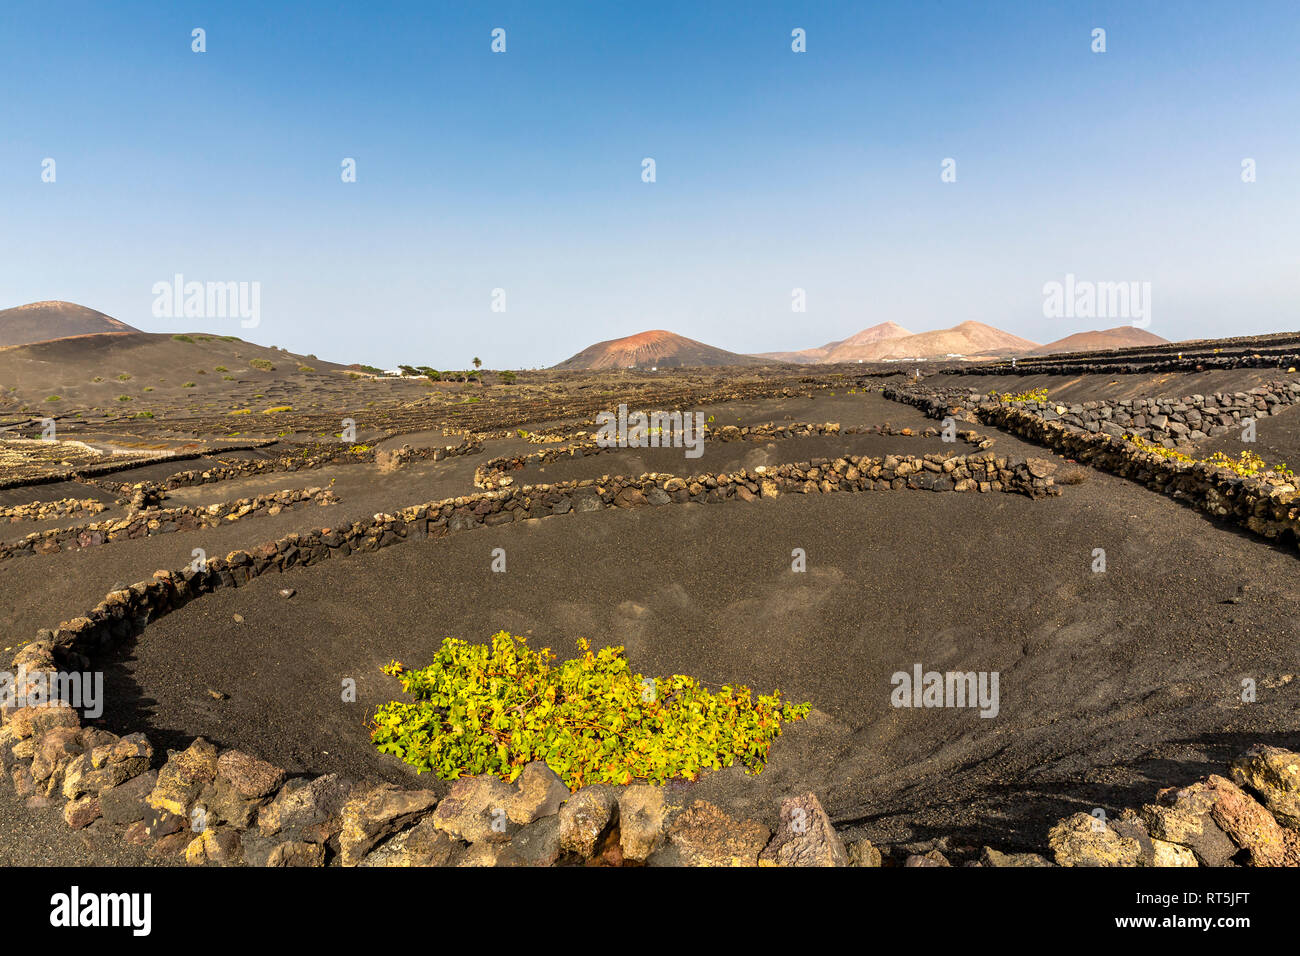 Spain, Canary Islands, Lanzarote, La Geria, viticulture at Volcanic landscape Stock Photo